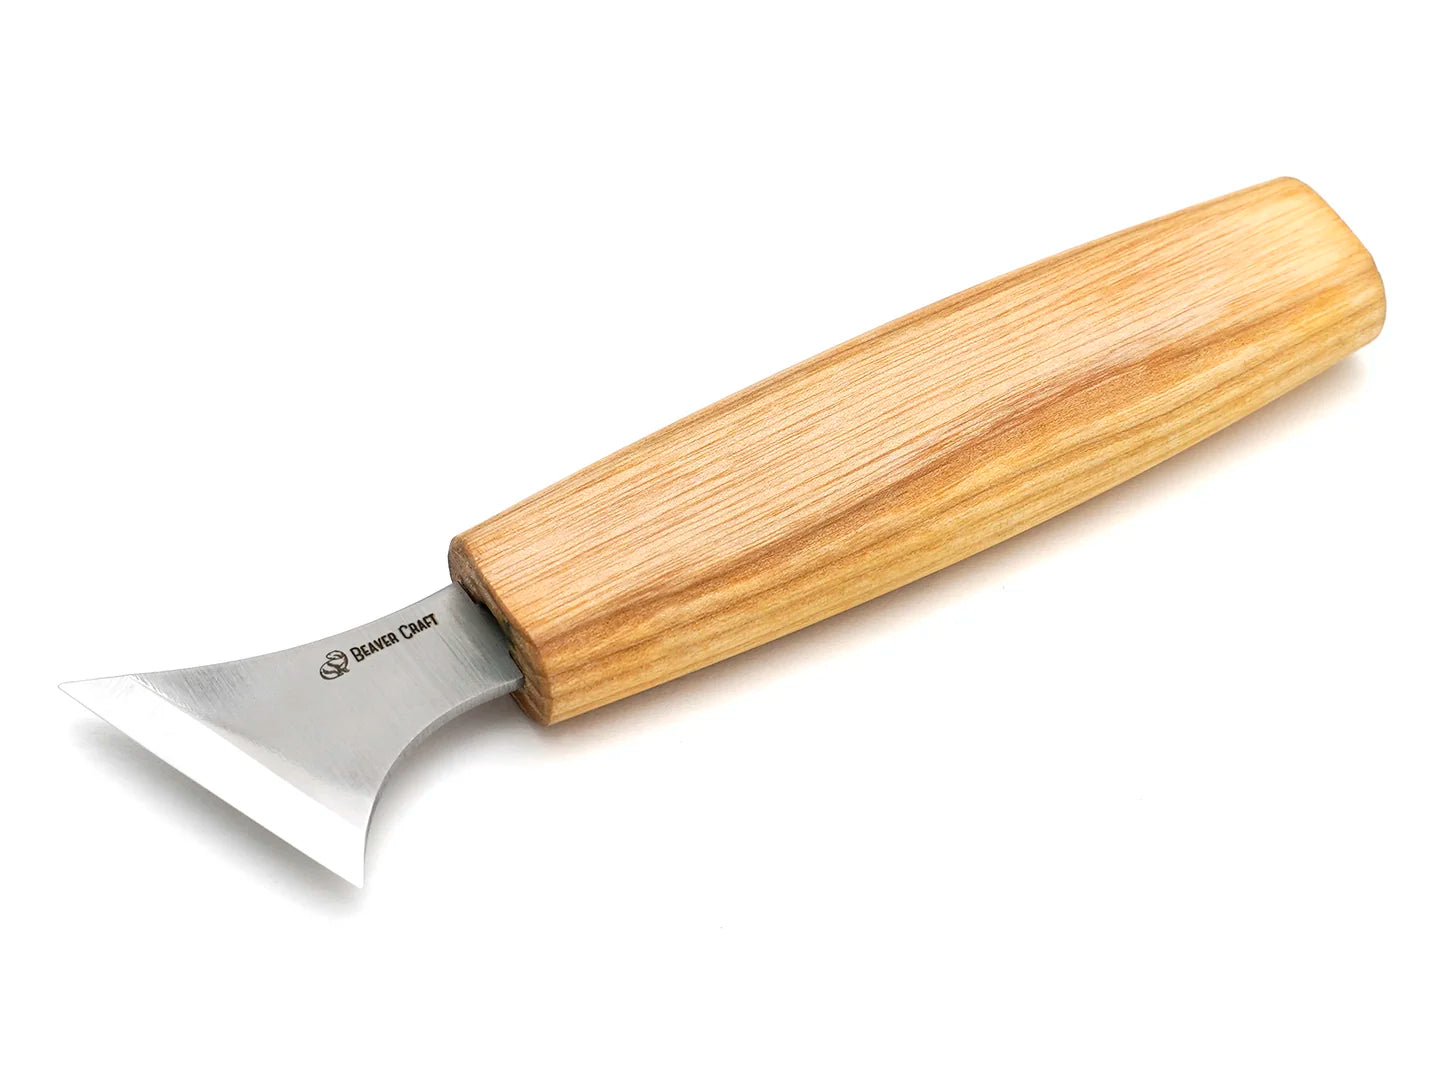 BeaverCraft Geometric Carving Knife C10, wood carving knife for geometric  carving